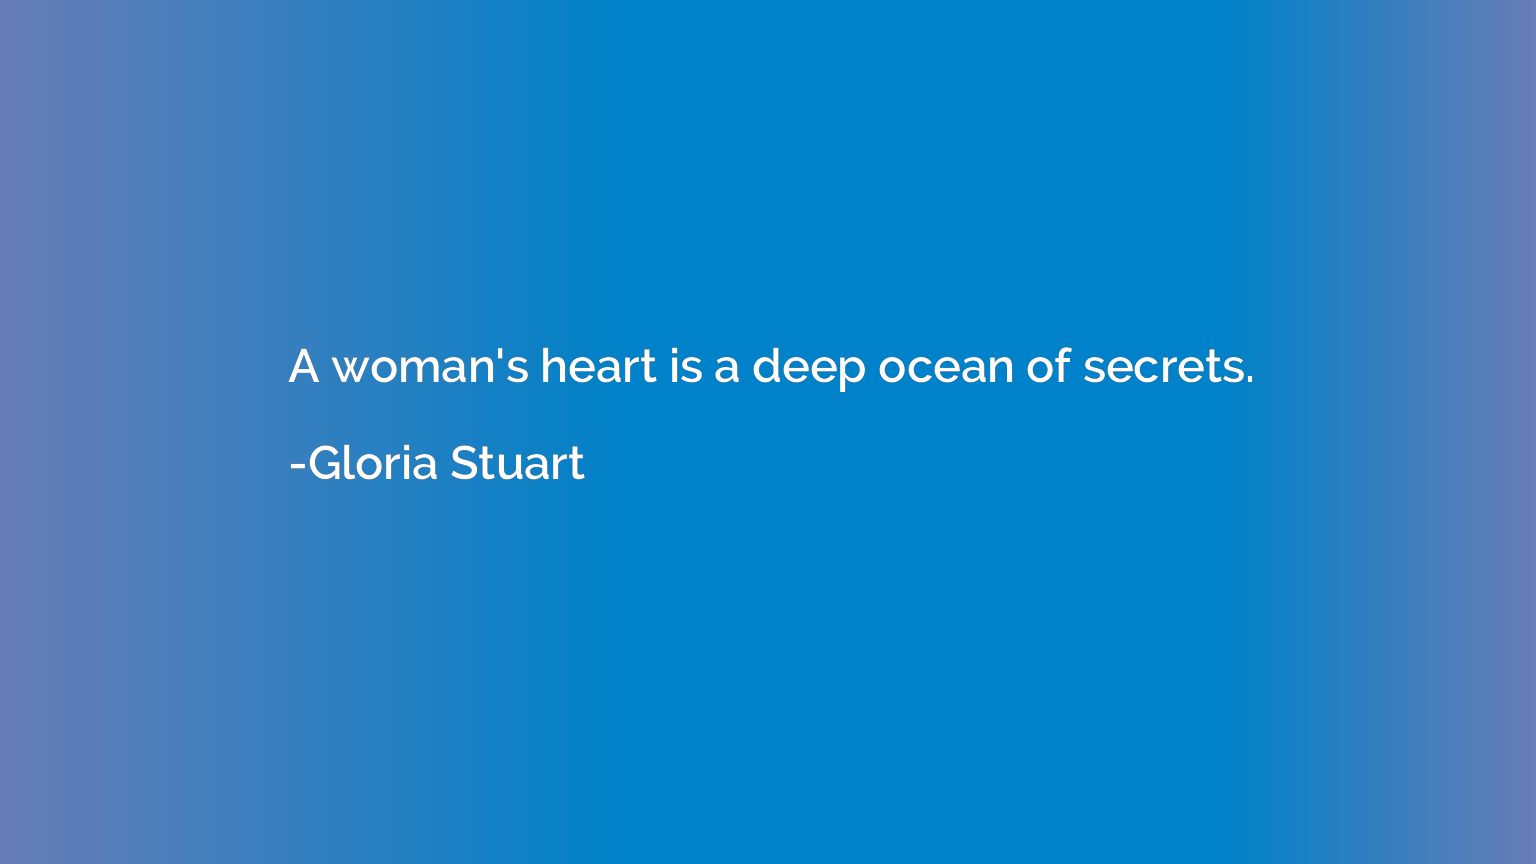 A woman's heart is a deep ocean of secrets.